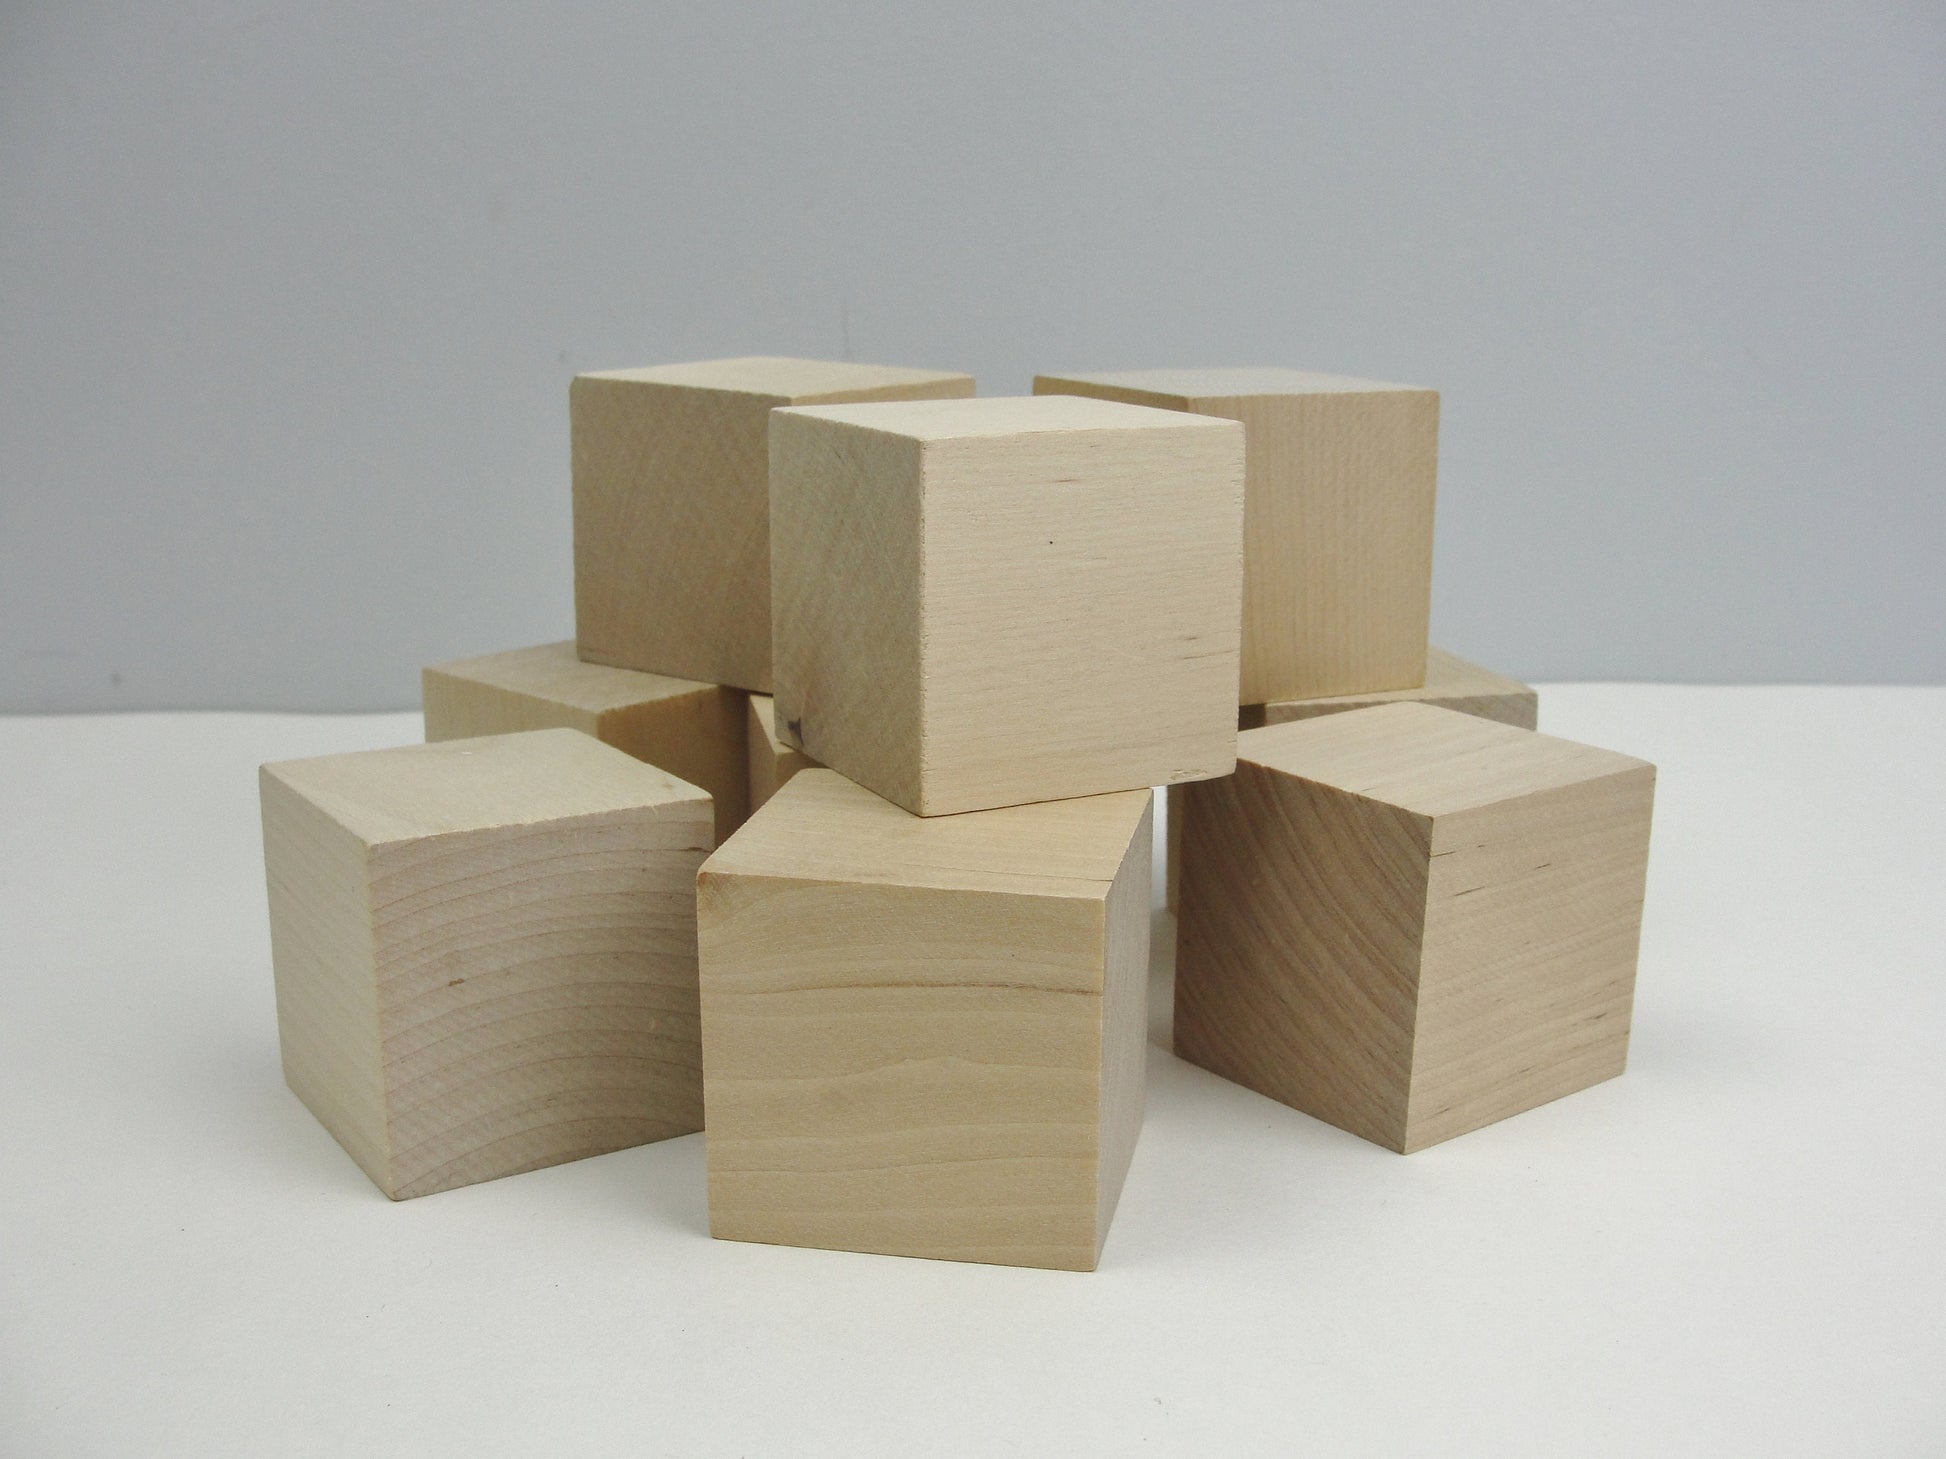 Wooden Blocks Craft Cube, Cube Wood Crafts